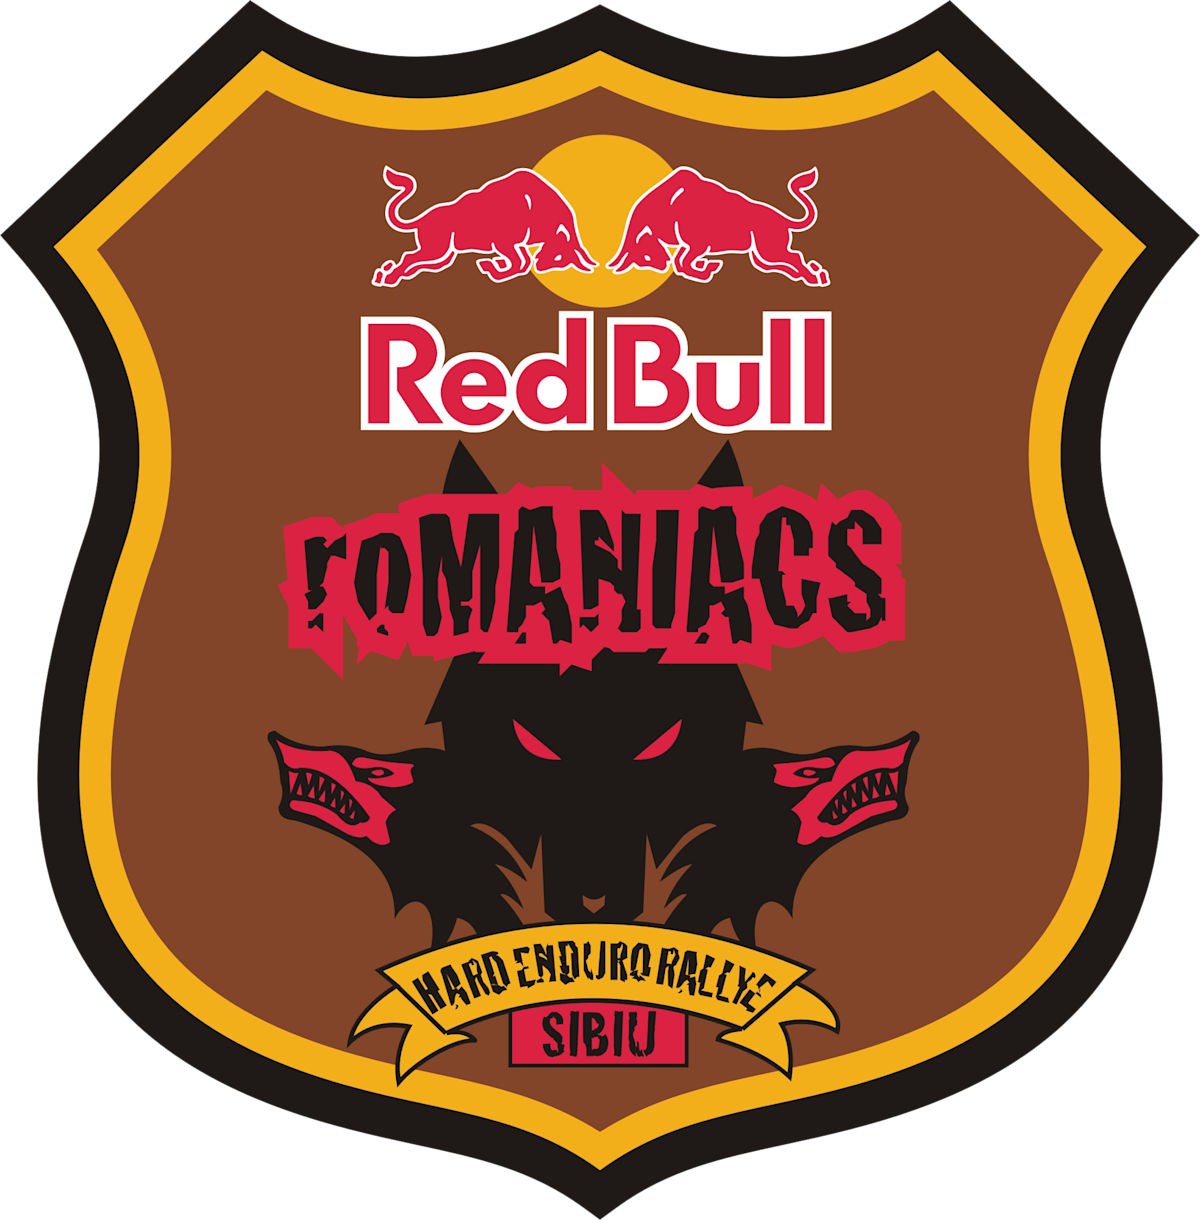 Red Bull Romaniacs 2020